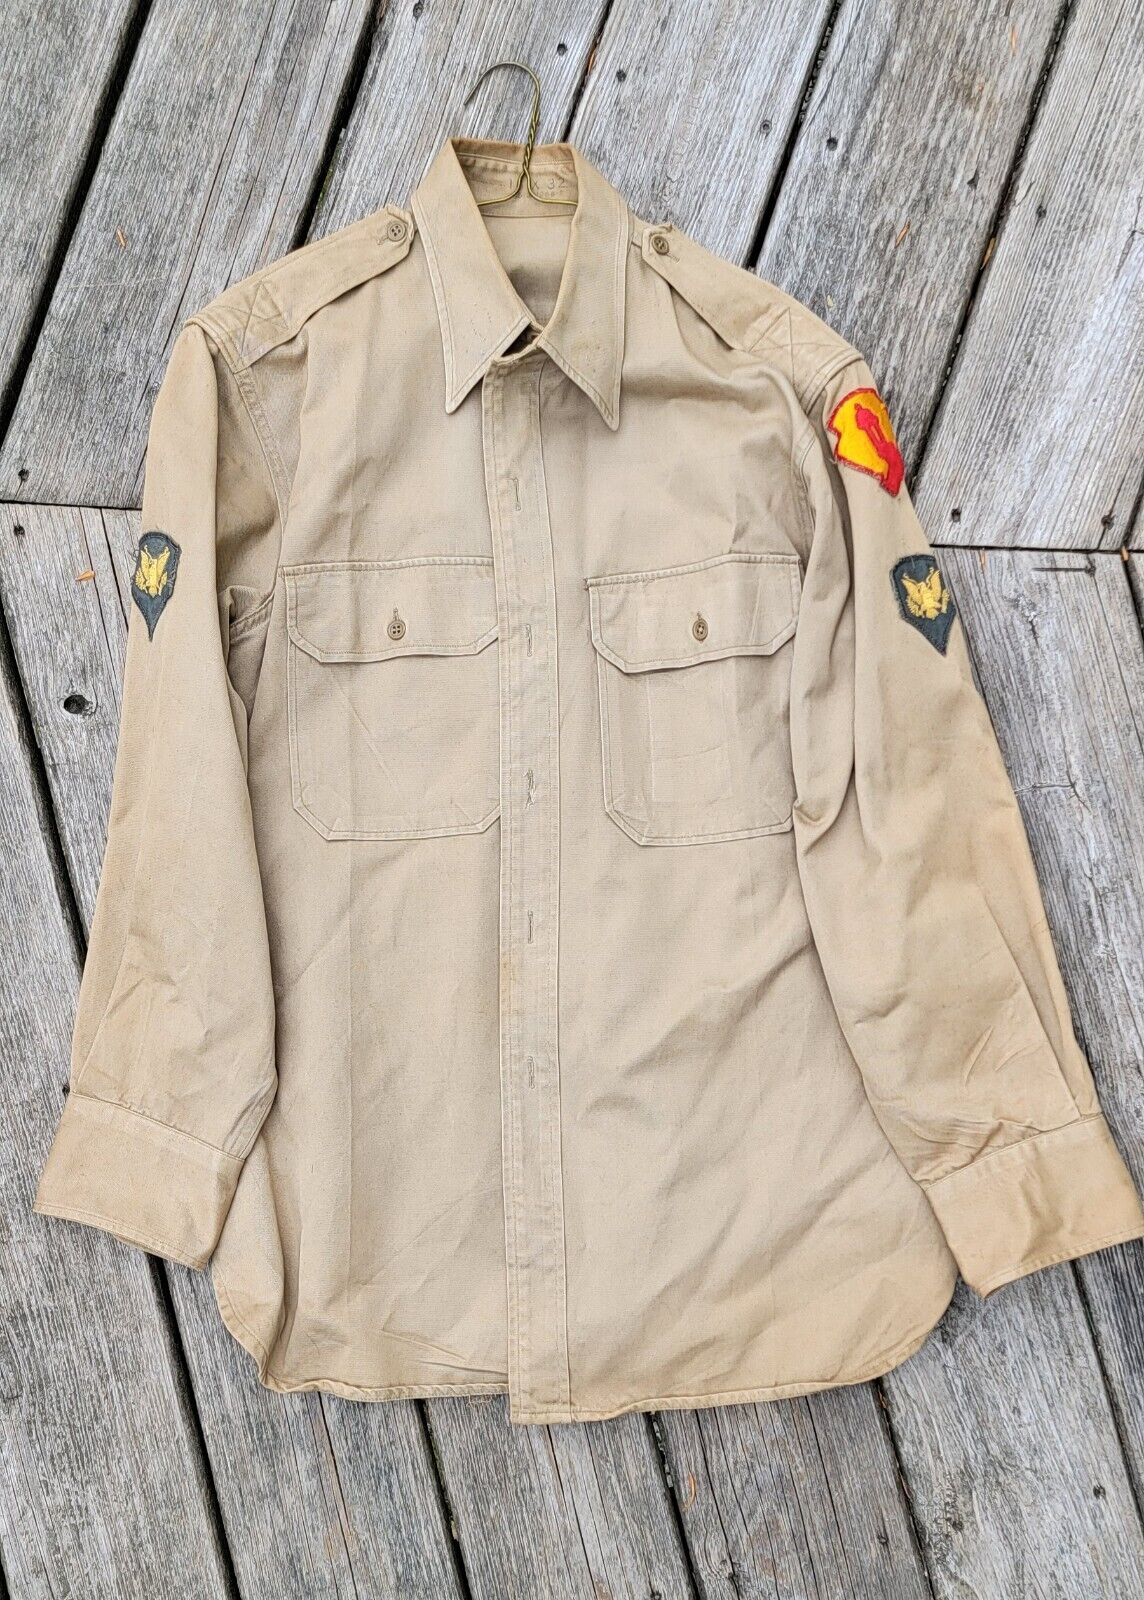 VTG 1946 Patent US Khaki Uniform LS Shirt w Patches Sz 16x32 Fordham Shirt Co.